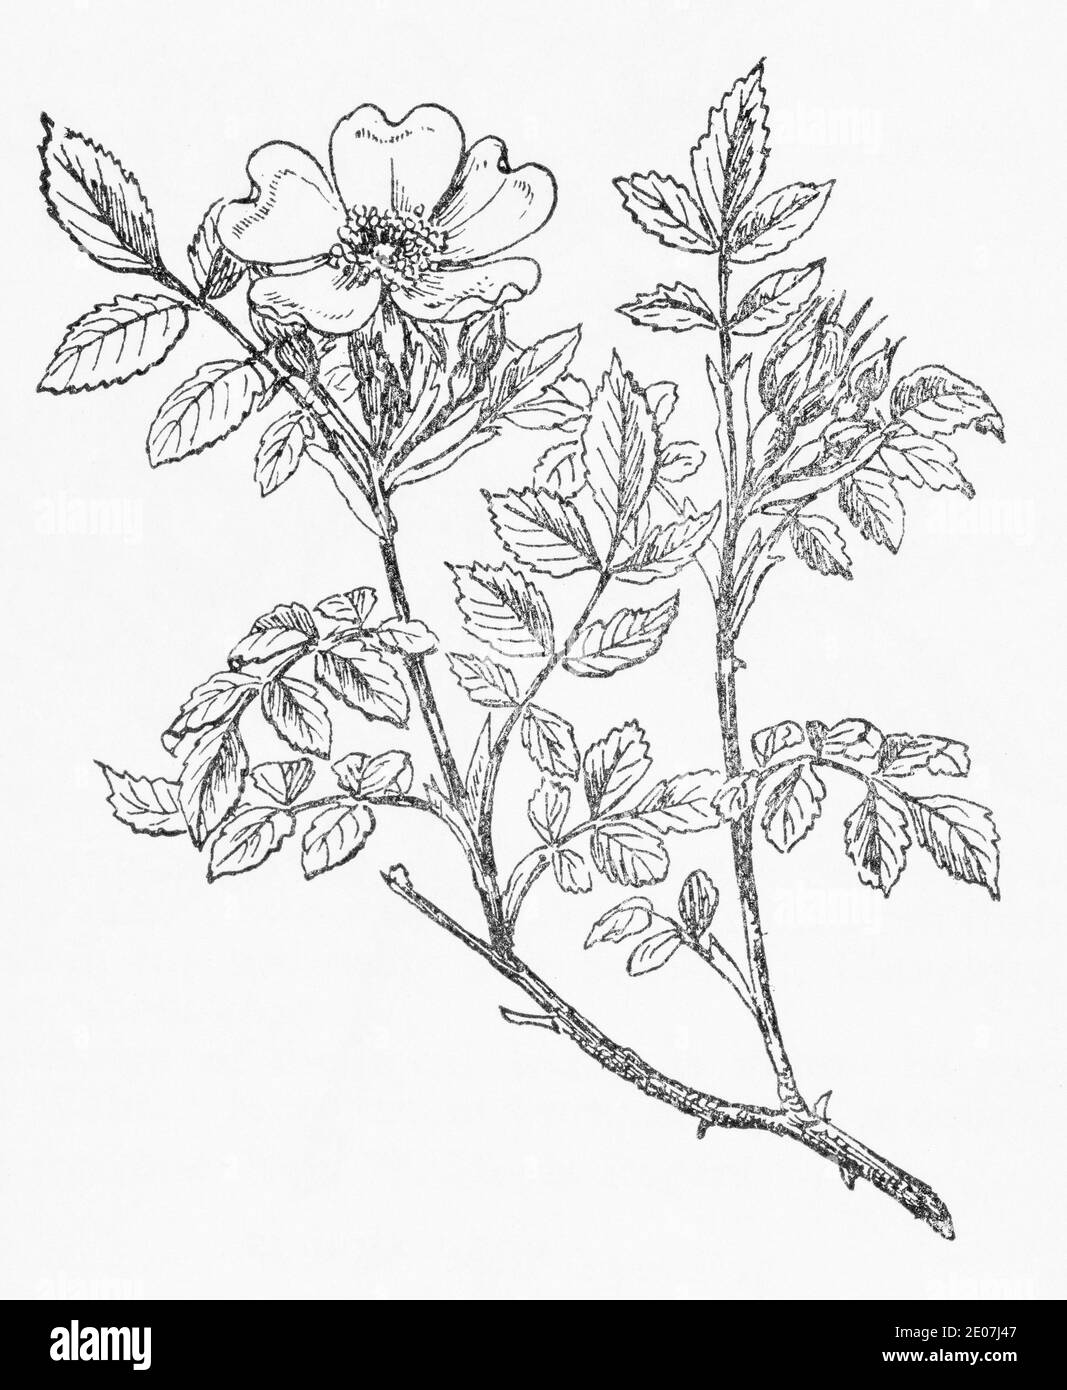 Old botanical illustration engraving of Dog Rose / Rosa canina. Traditional medicinal herbal plant. See Notes Stock Photo